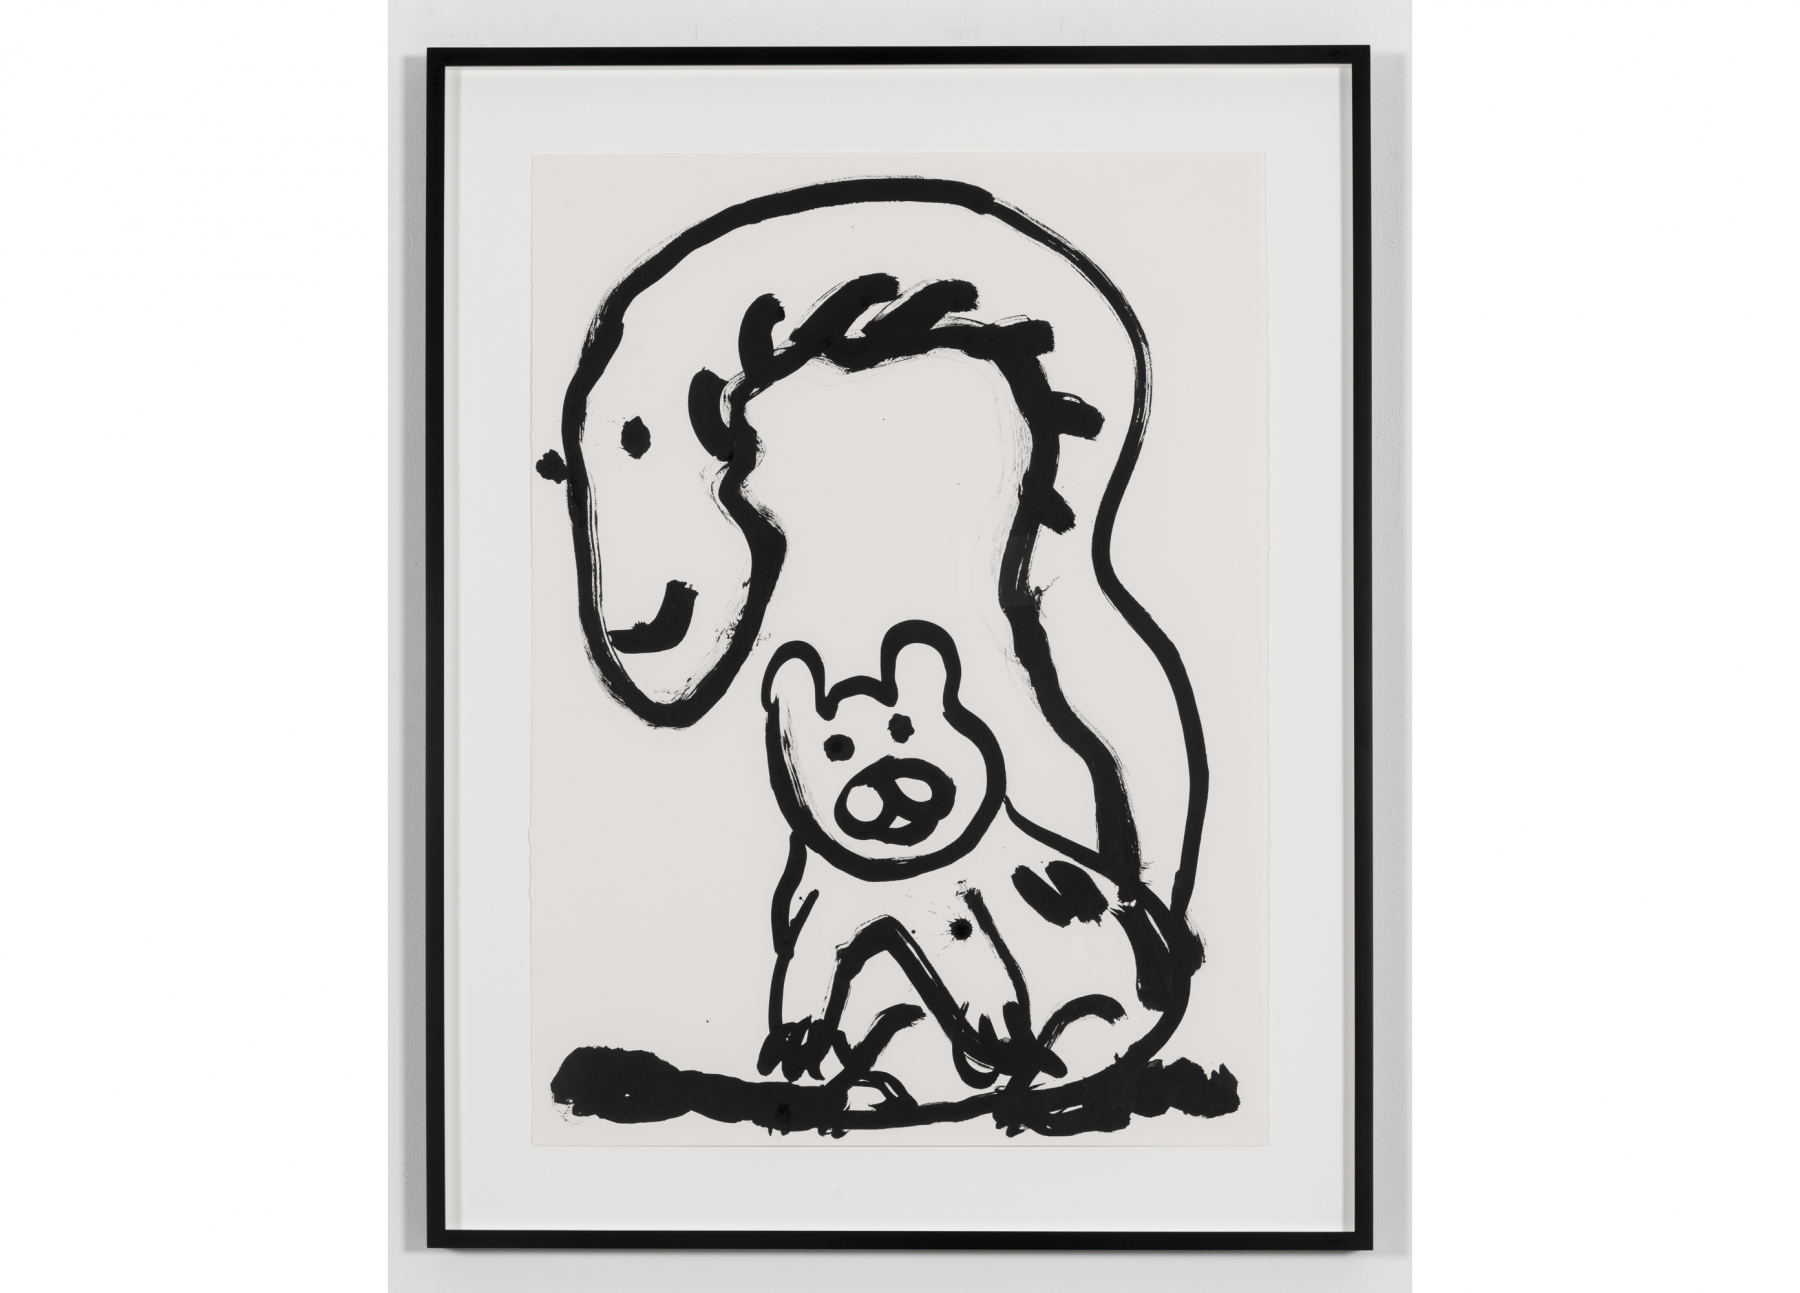 Paul Chan

das Eichh&amp;ouml;rnchen, Eichk&amp;auml;tzchen (squirrel, oak kitten), 2020

Ink on paper

Paper: 30 x 22 inches (76.2 x 55.9 cm)

Frame: 36 x 28 1/4 x 1 1/2 inches (91.4 x 71.8 x 3.8 cm)